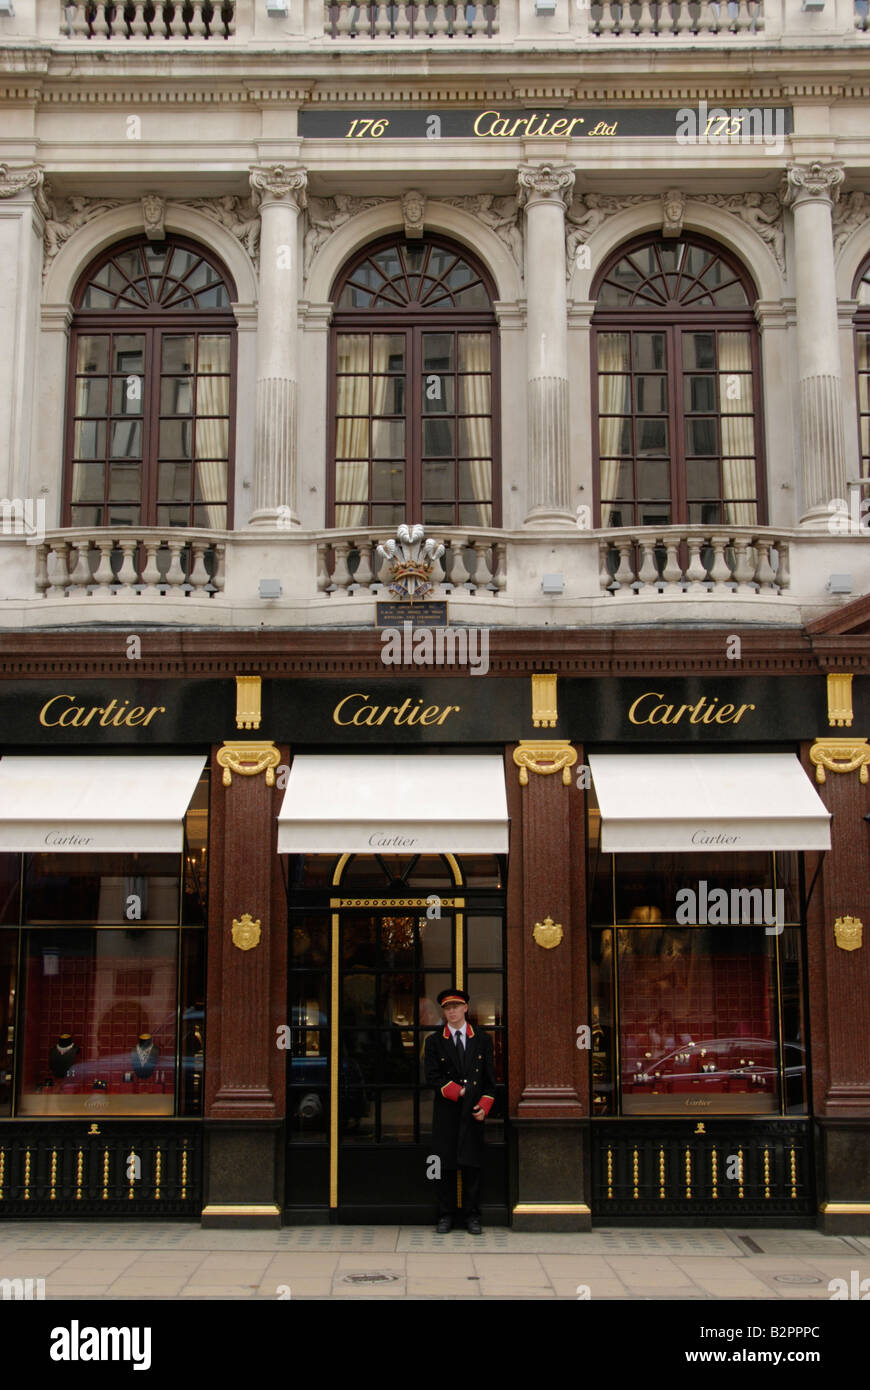 Portiere esterno permanente Cartier gioiellerie in Old Bond Street London Inghilterra England Foto Stock